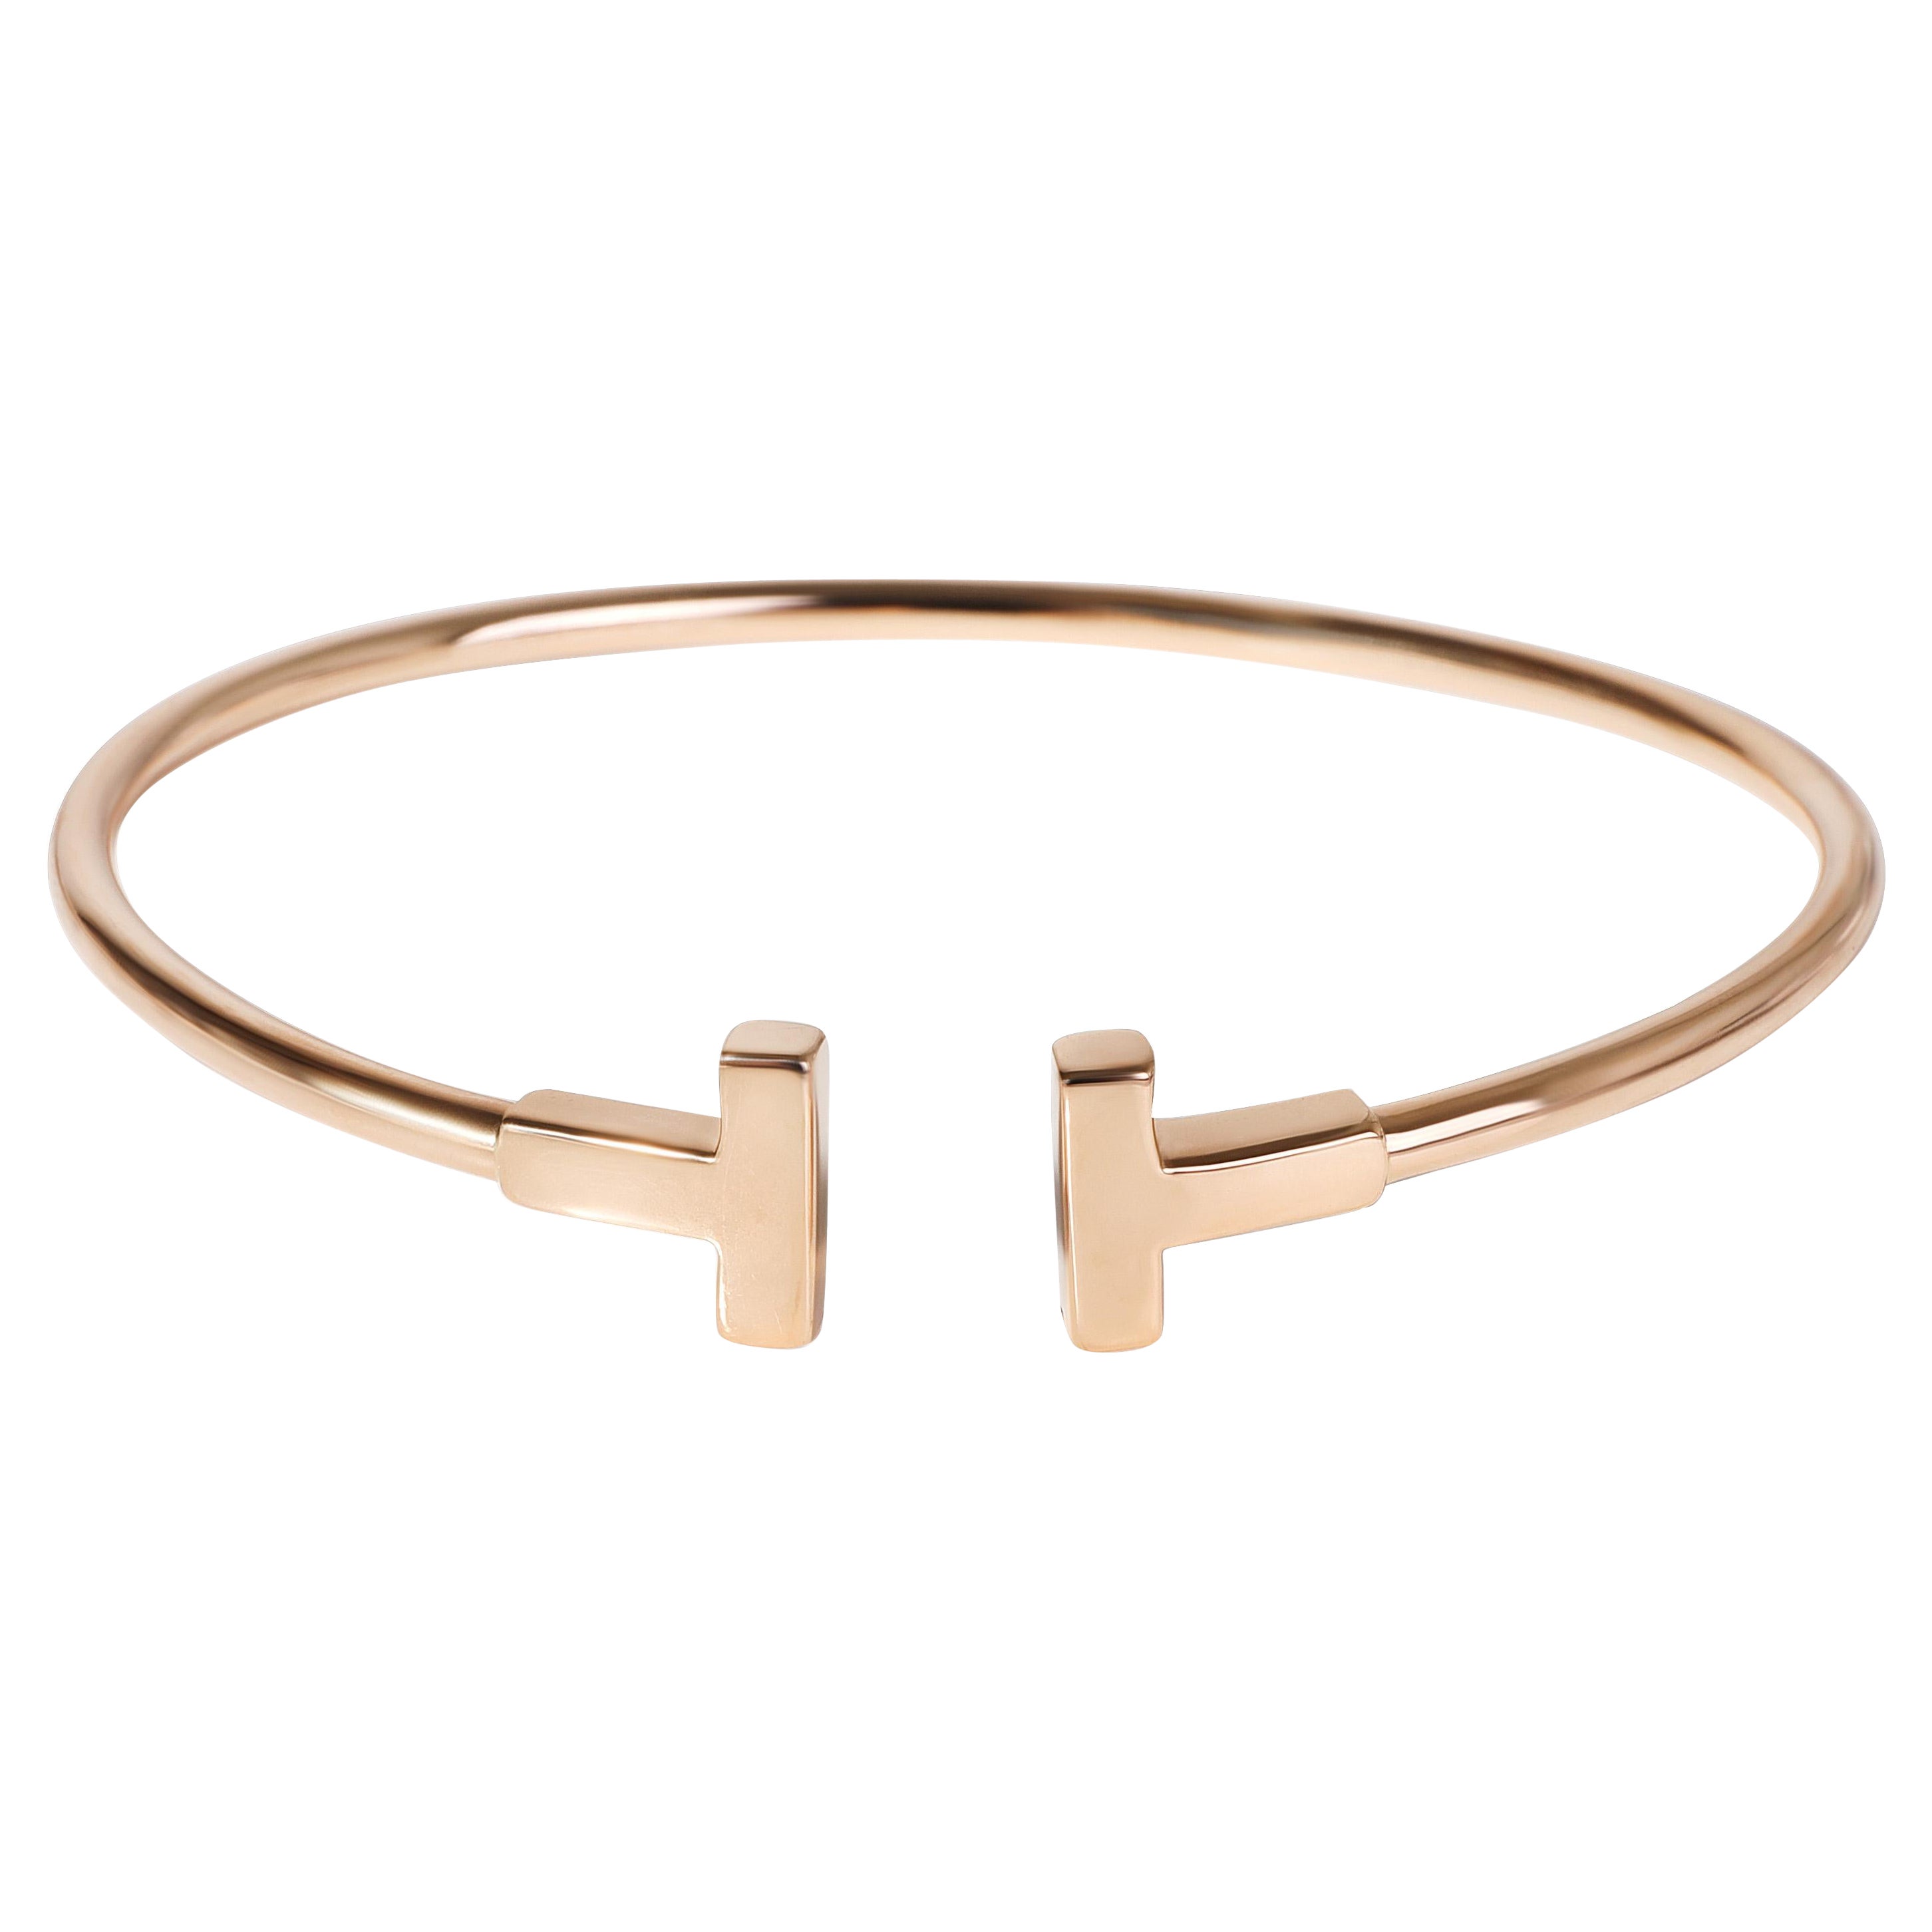 Tiffany & Co. T Wire Bracelet in 18K Rose Gold Size Medium